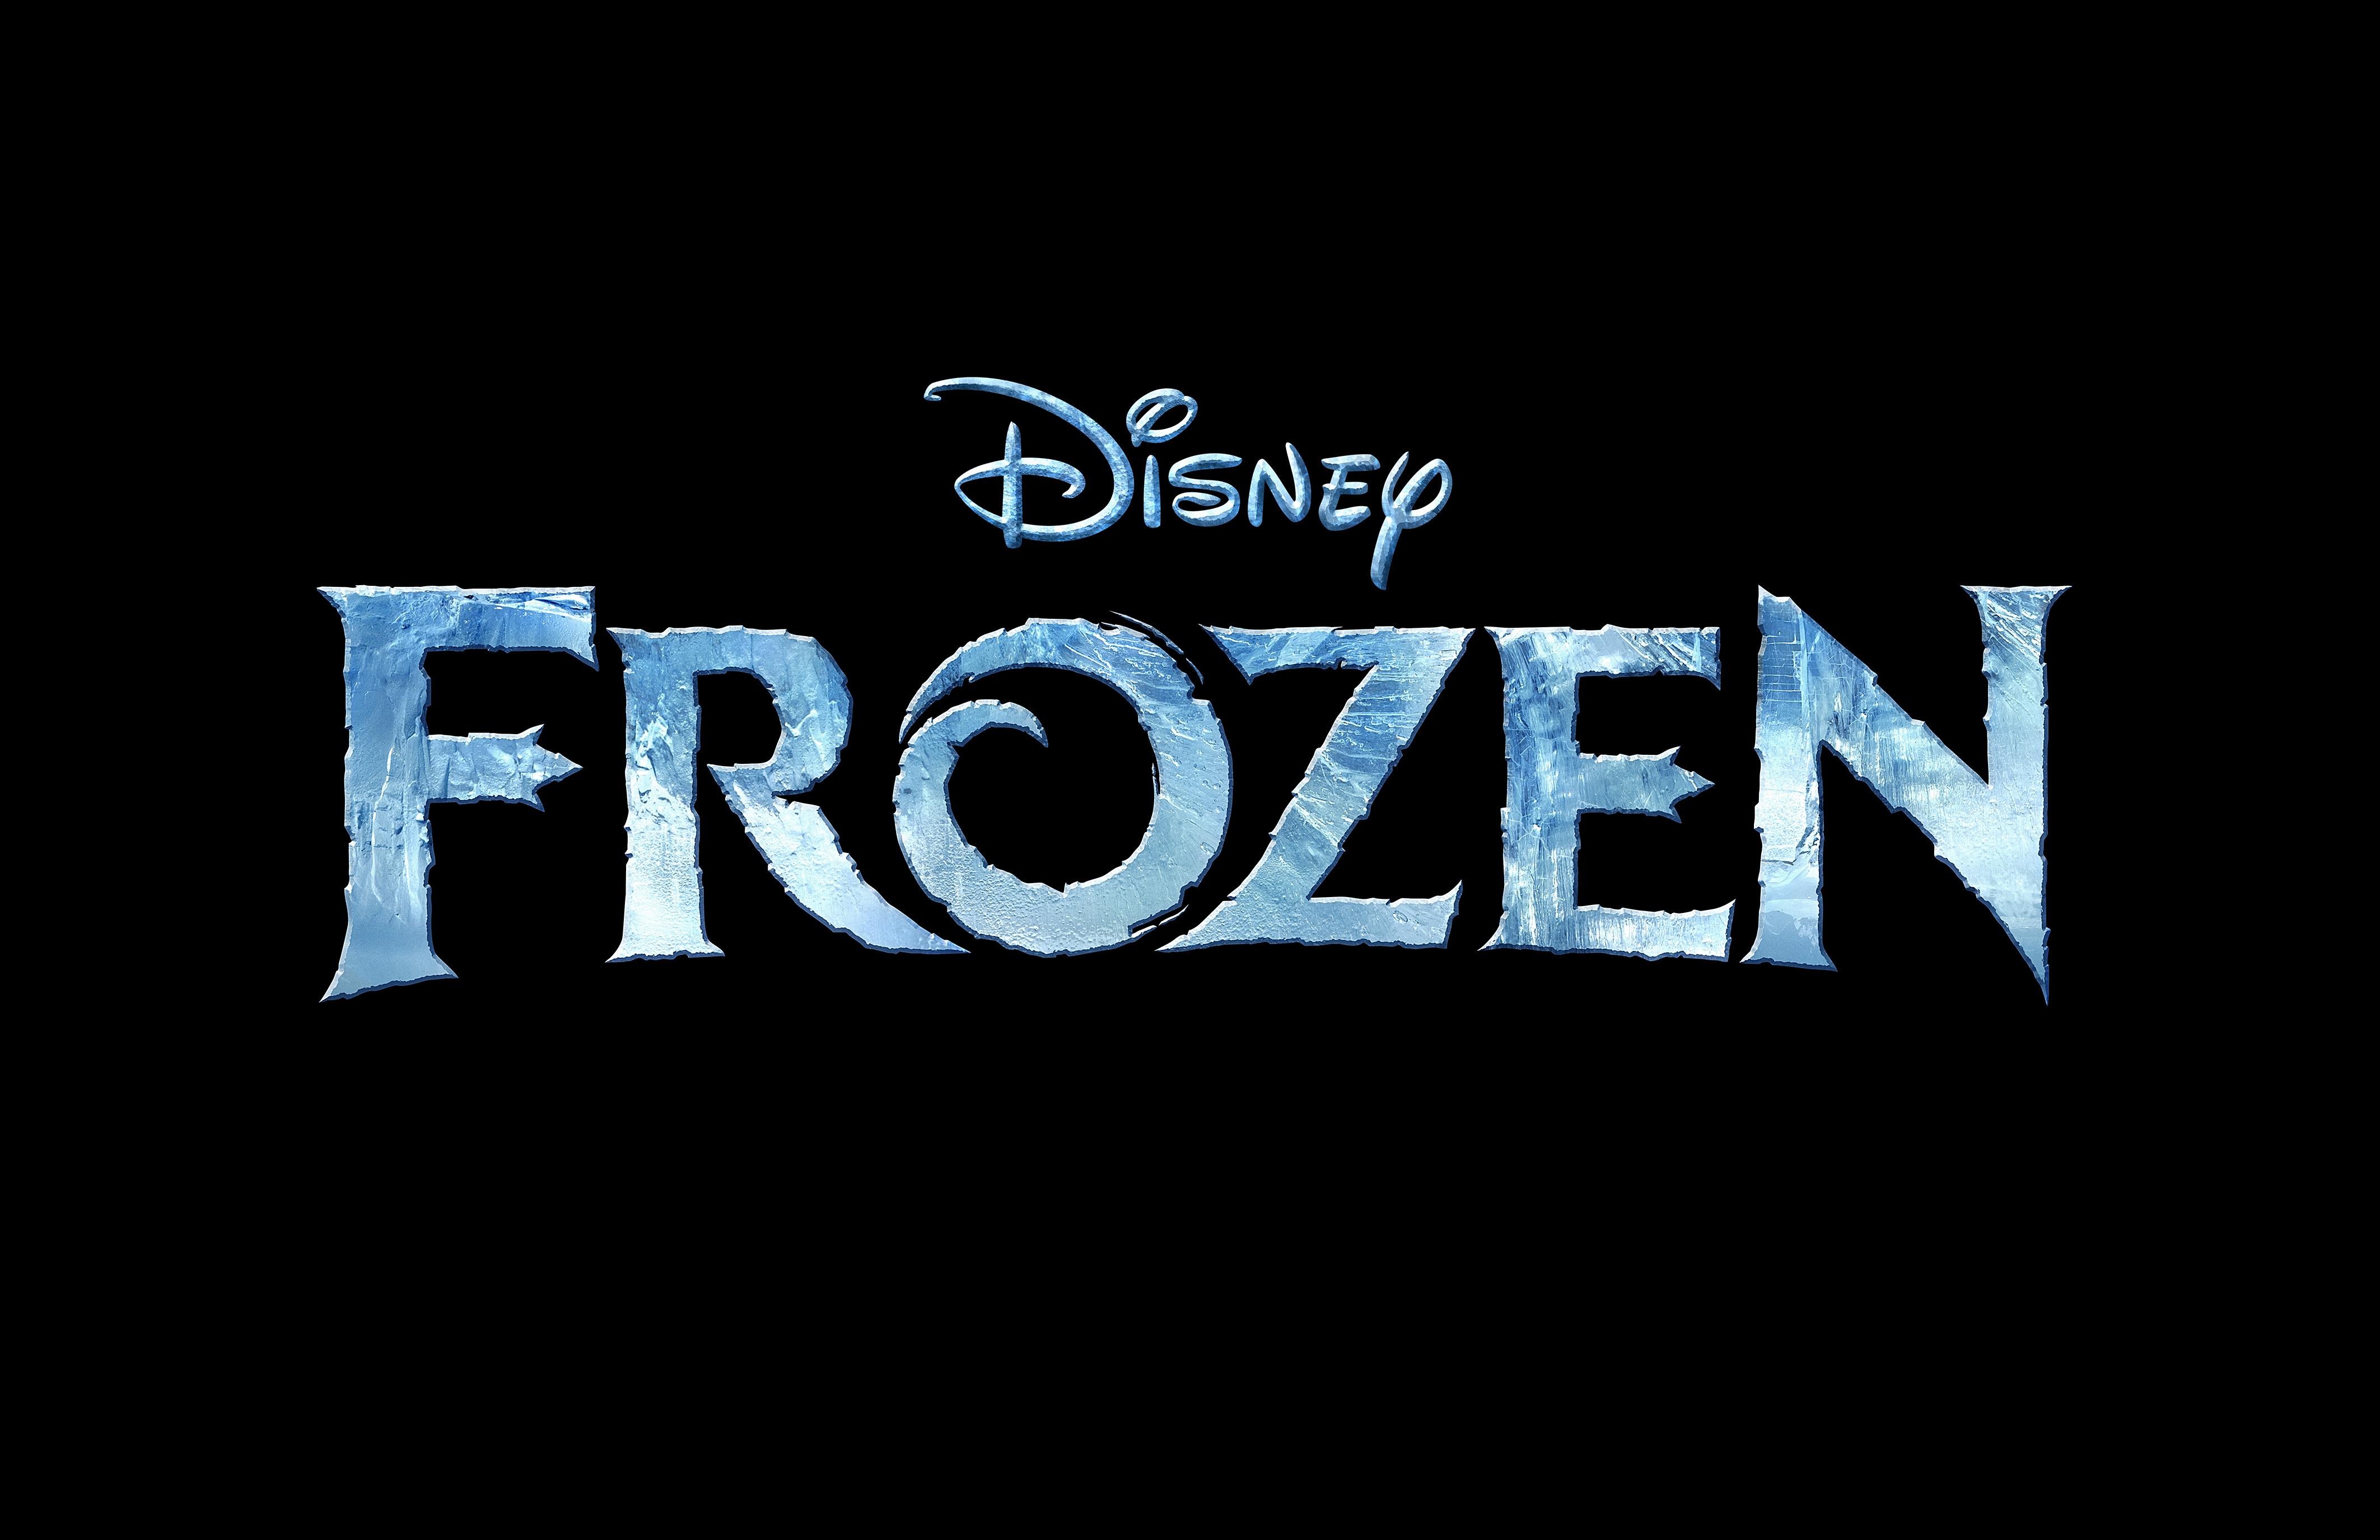 Disney Movie Title Logo - Froz .5.31.12-logo-R22 - We Are Movie Geeks